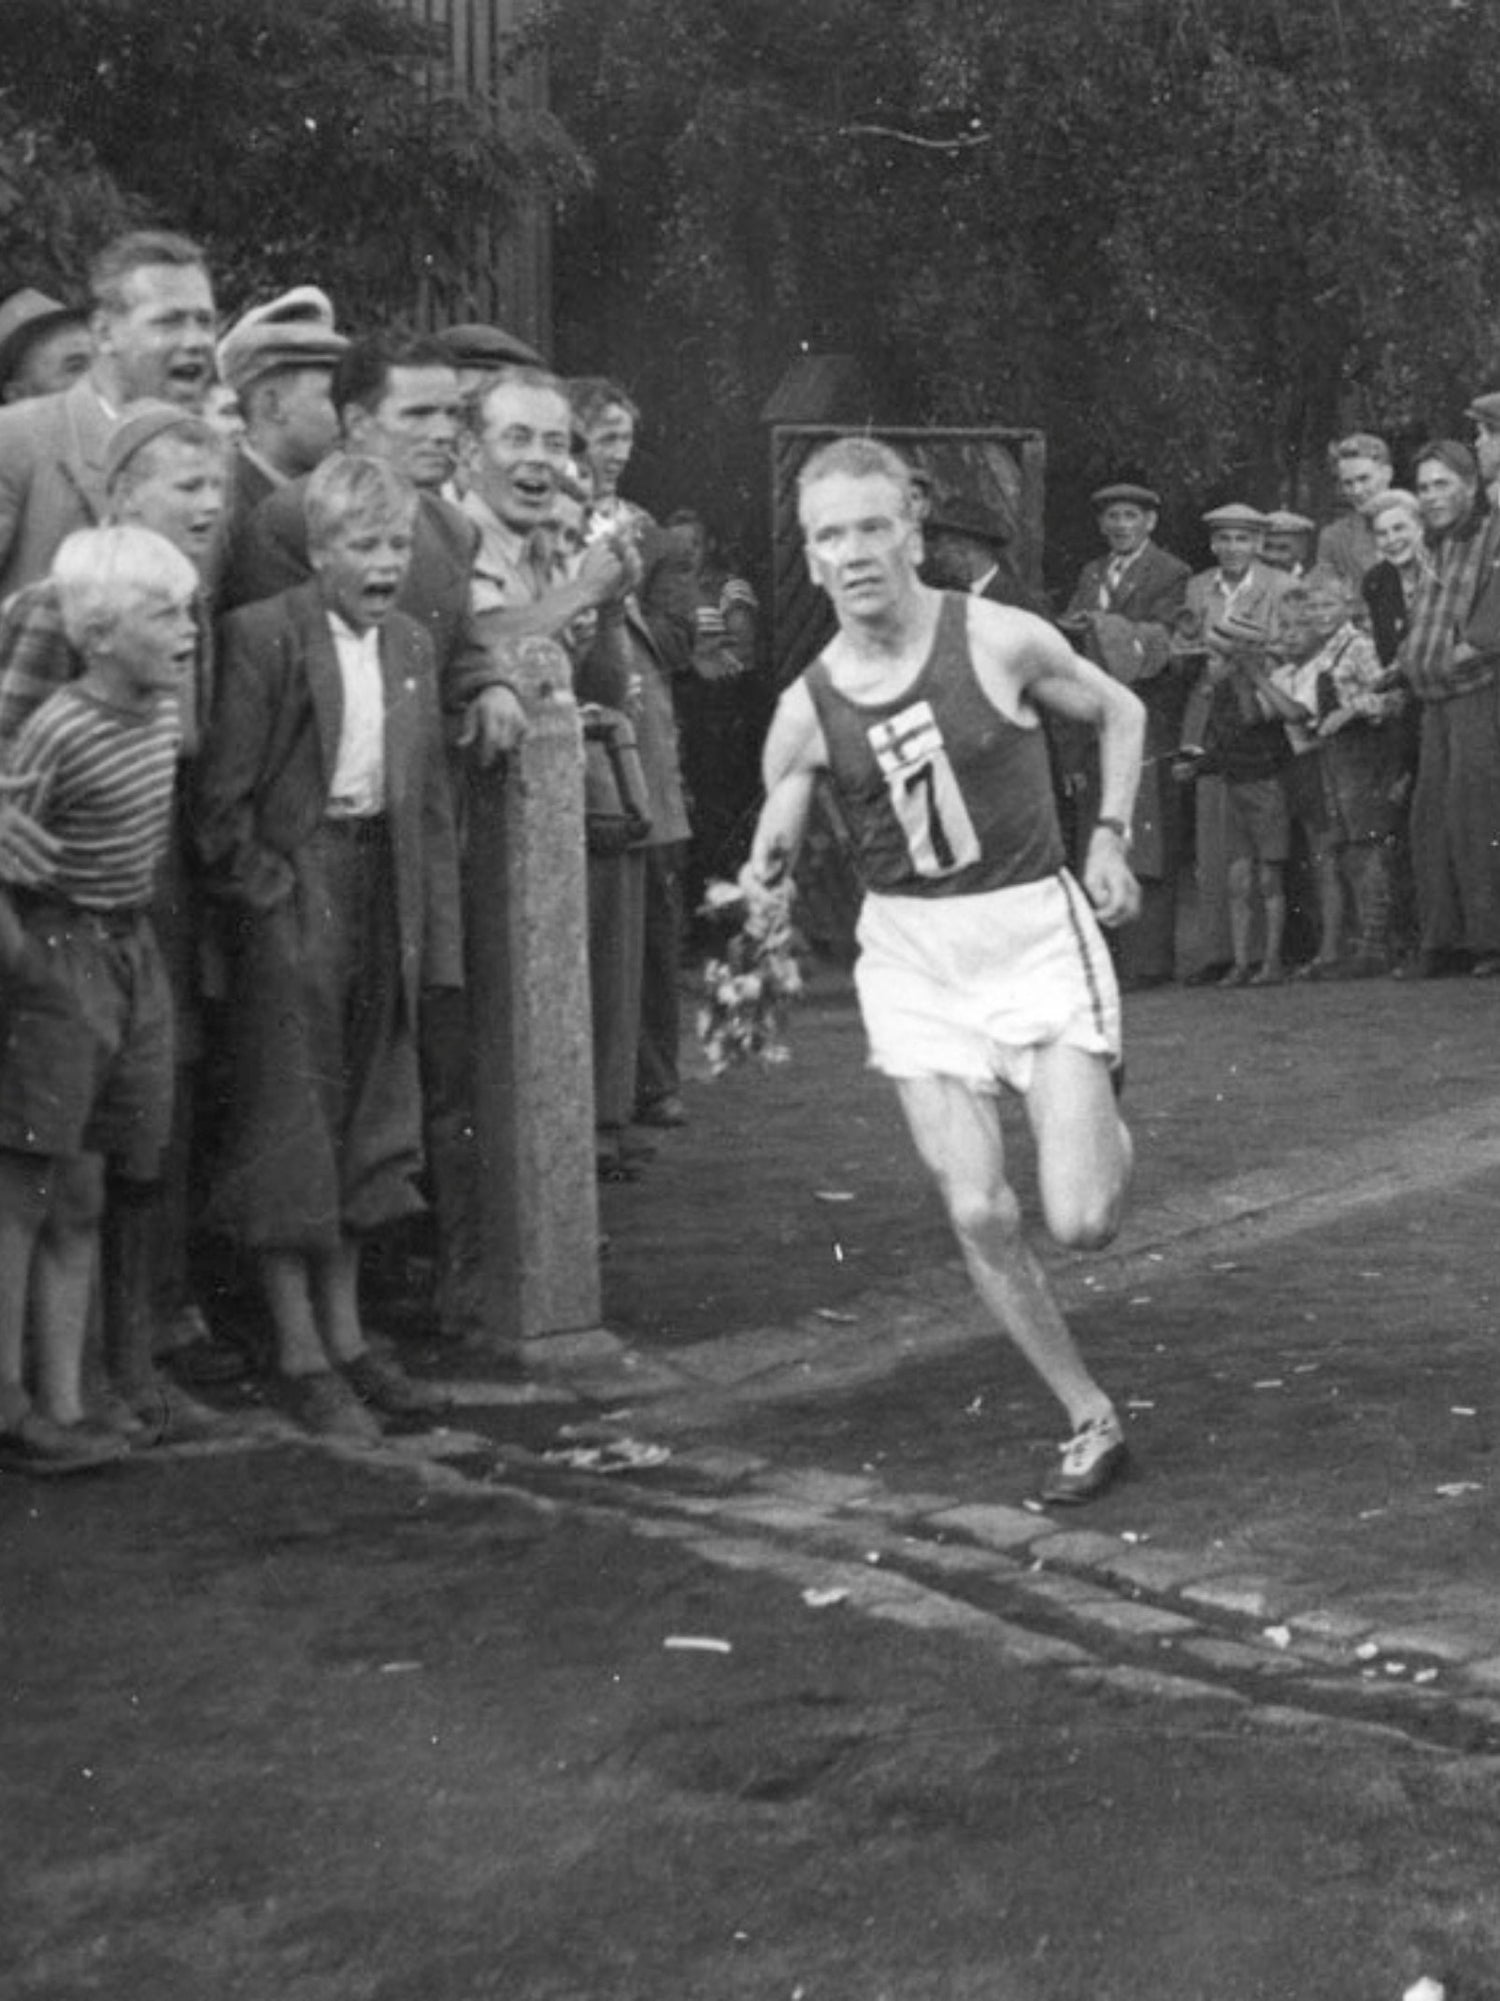 History of Finnish Champions at the Boston Marathon